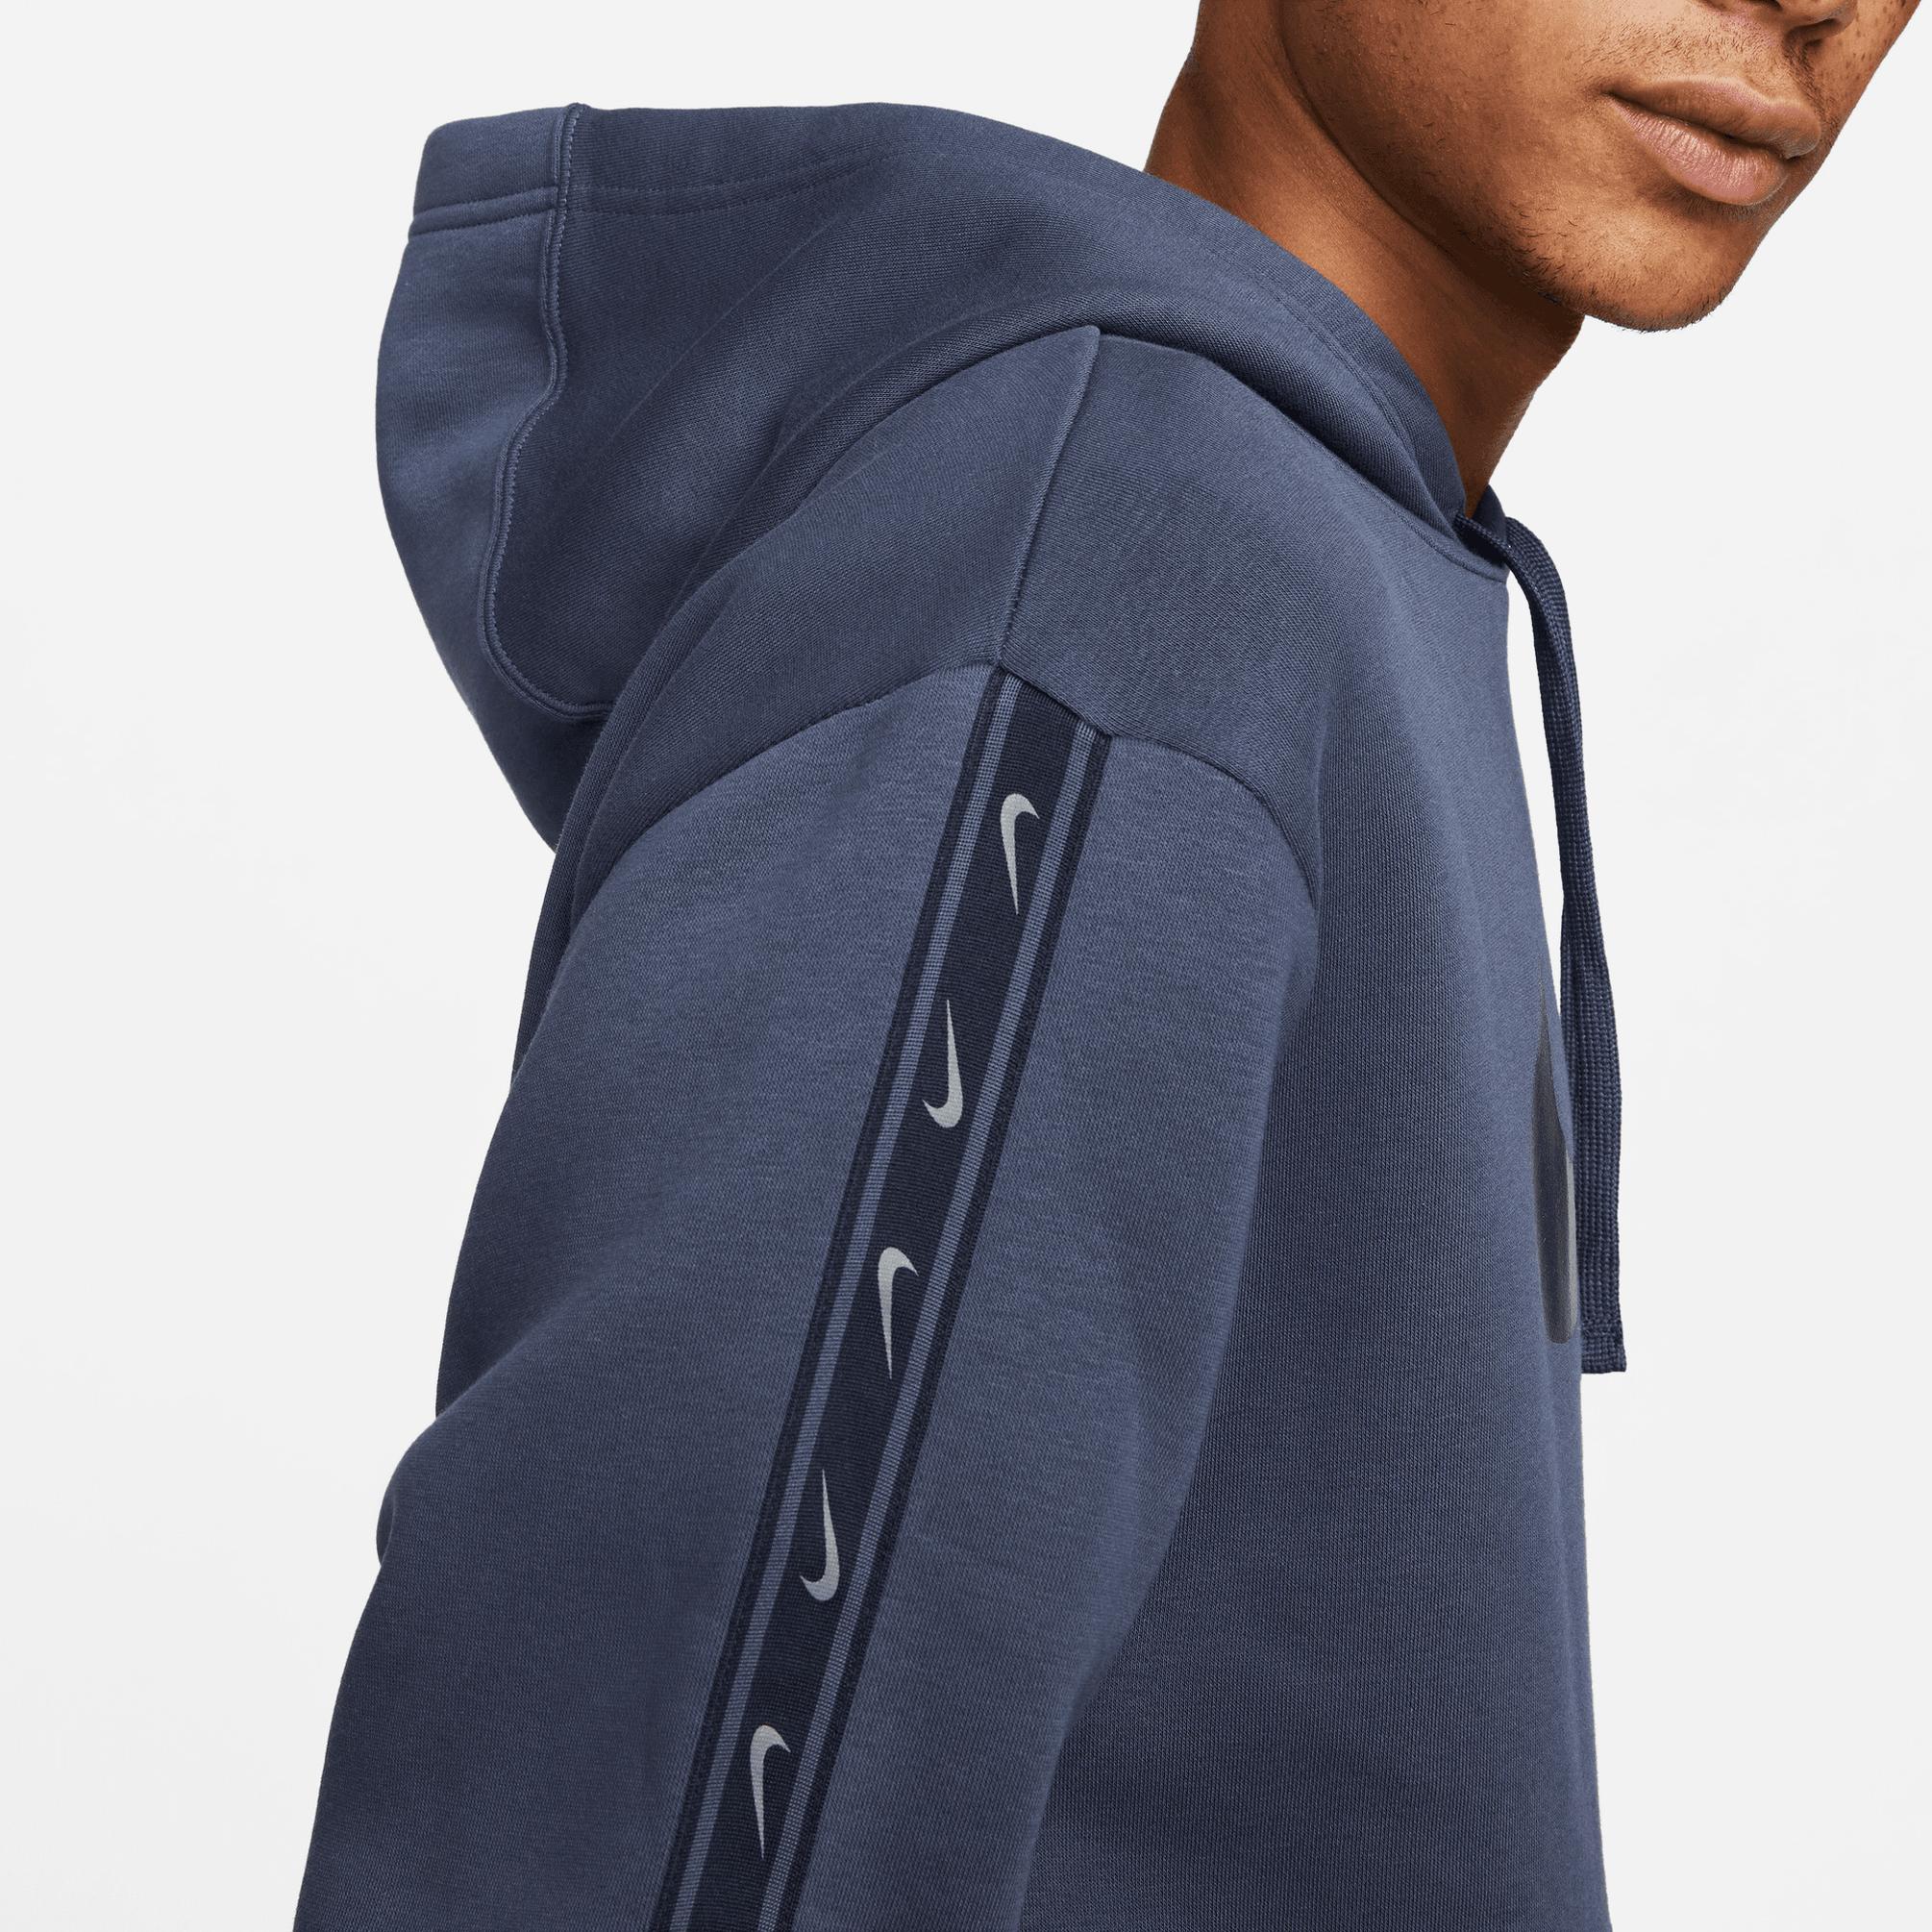  Nike Sportswear Repeat Fleece Pullover Erkek Lacivert Hoodie